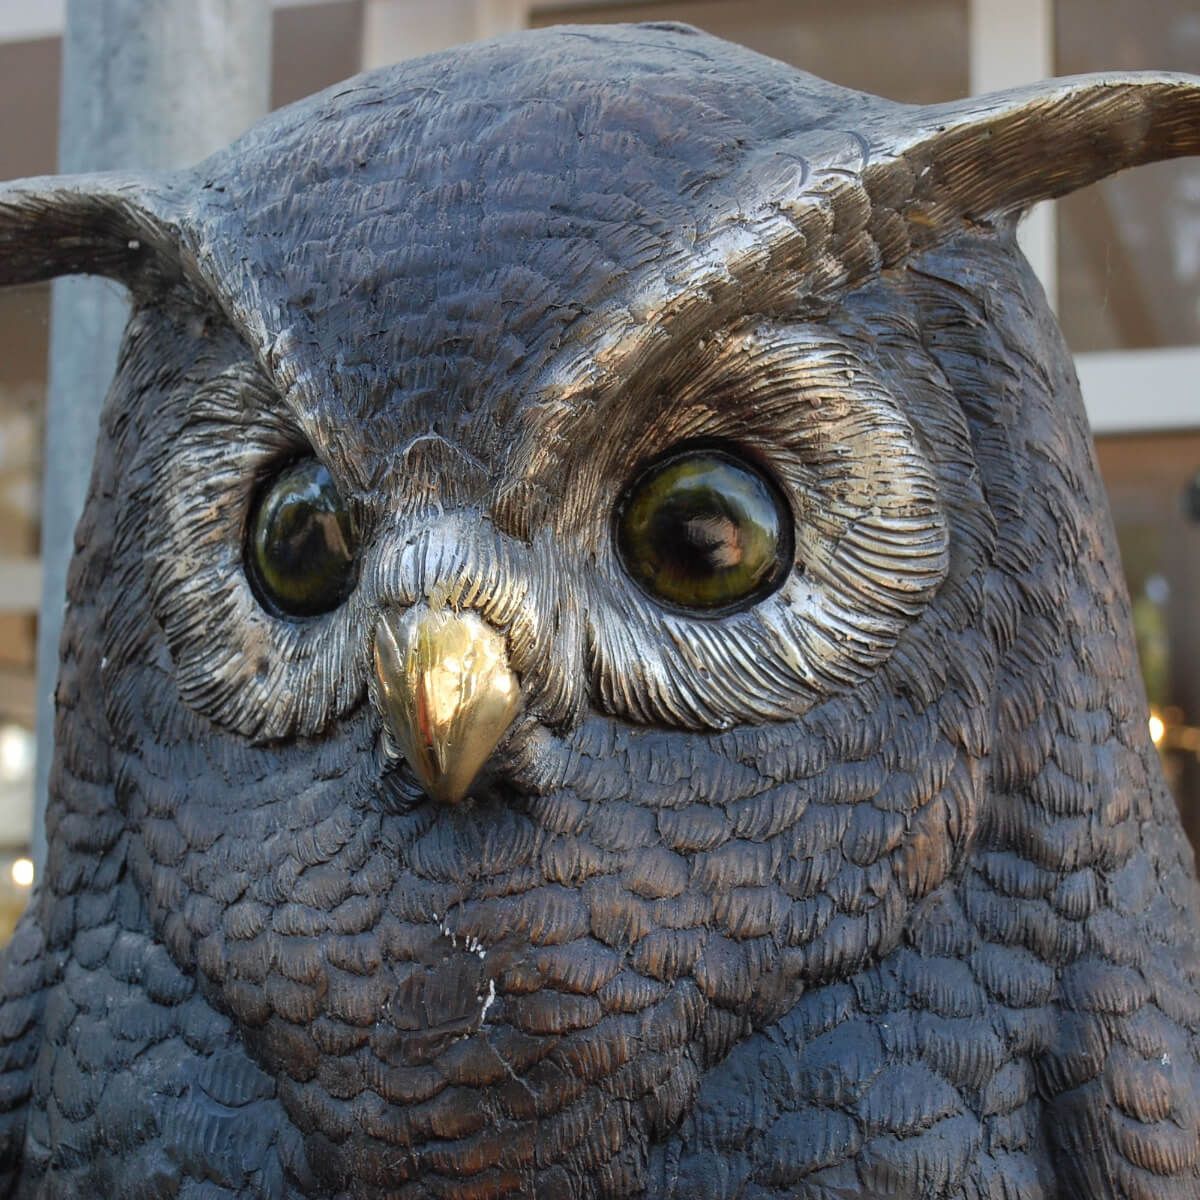 ★ Bronze Figur Eule owl mit antiker Patina 512-2